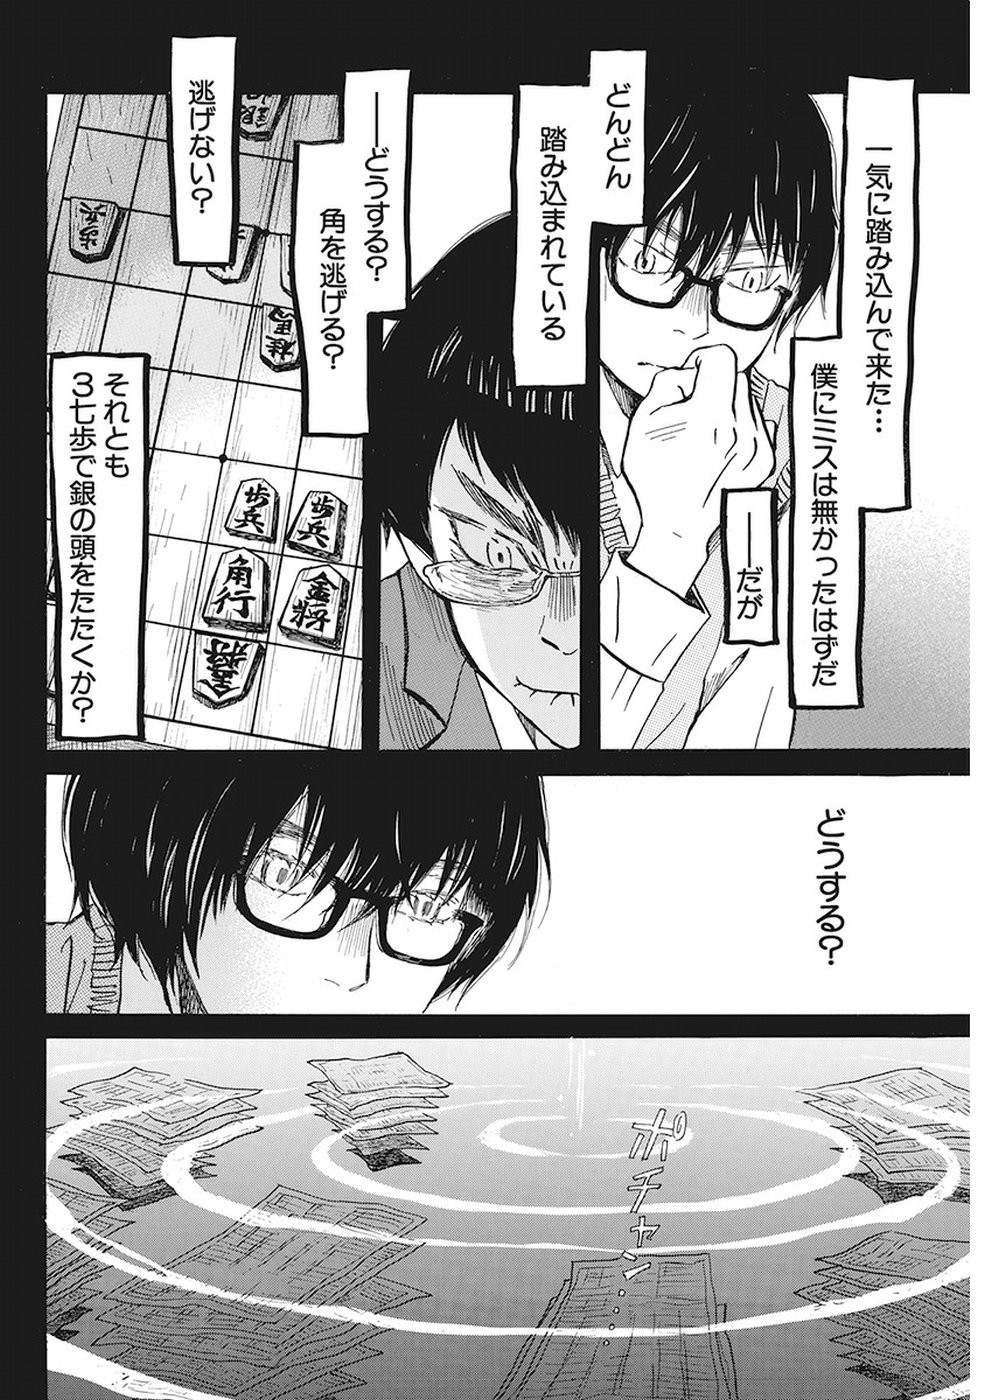 3 Gatsu no Lion - Chapter 159 - Page 8